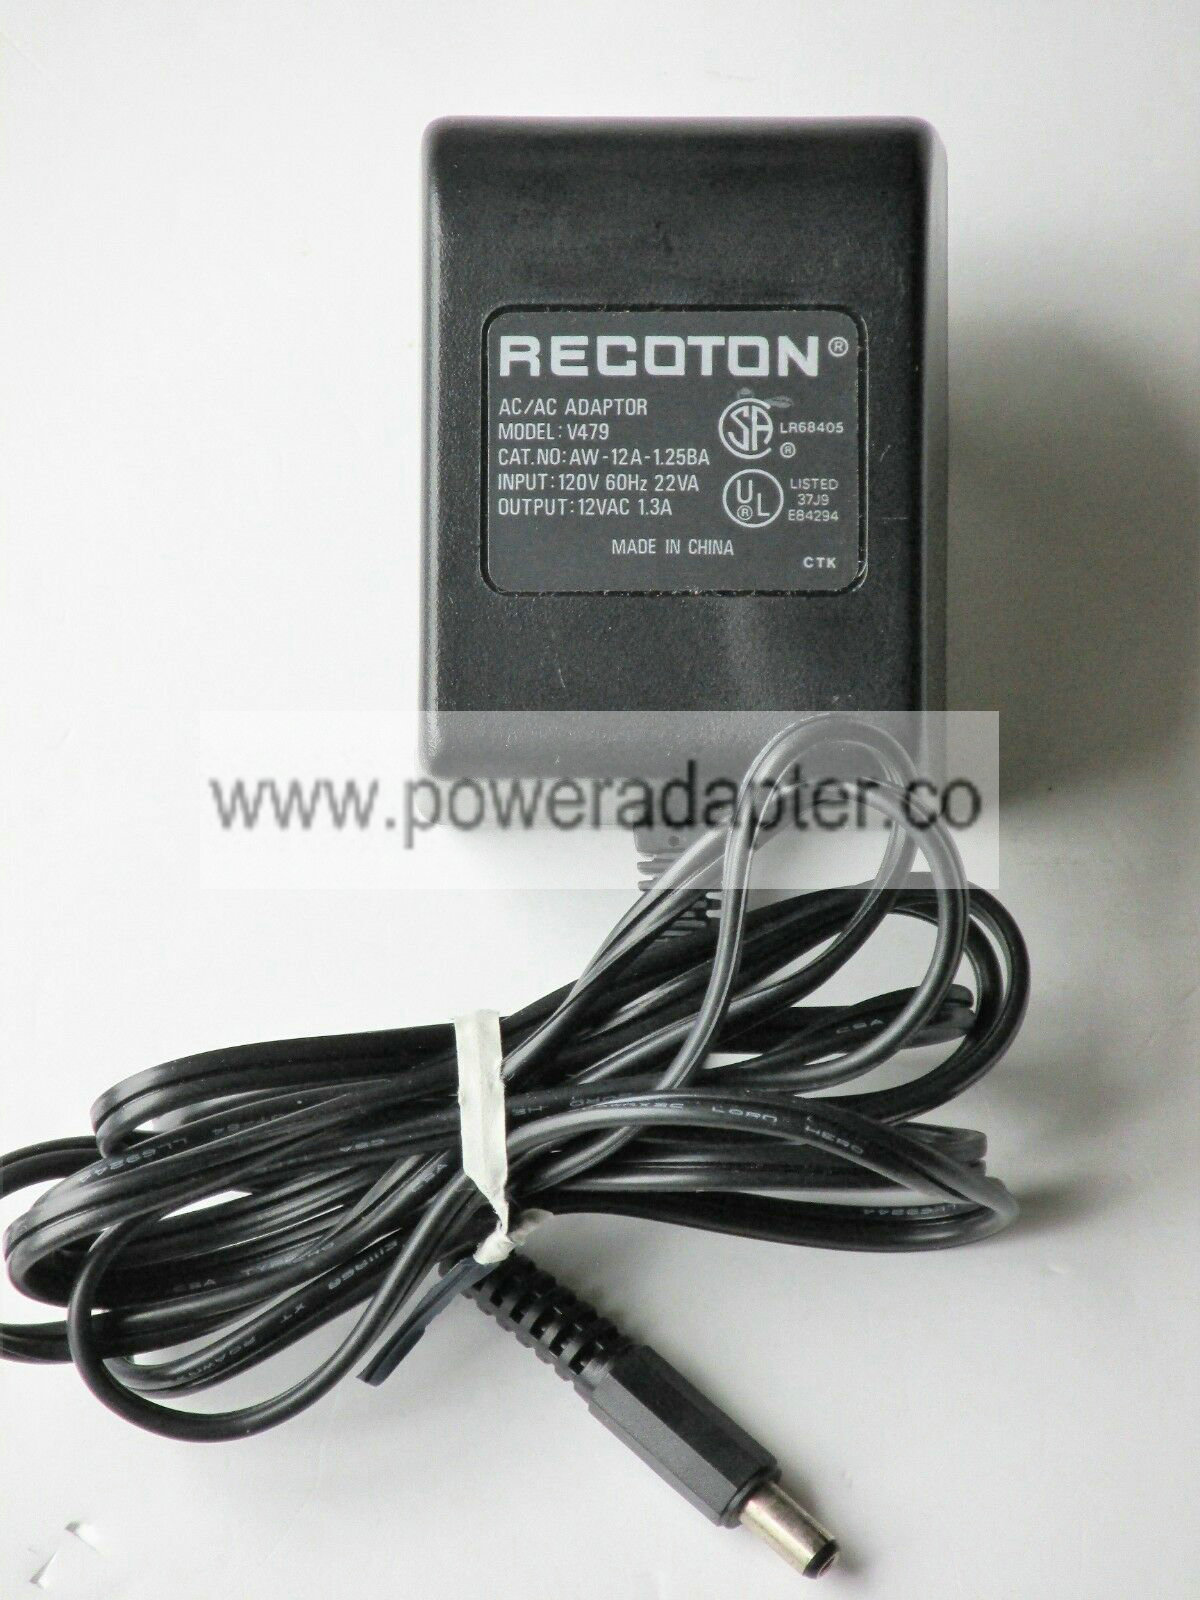 Recoton AC Adapter Power Supply #V479 - 120V 60Hz Recoton AC Adapter Power Supply - Model #V479 - 120V 60Hz Overall e - Click Image to Close